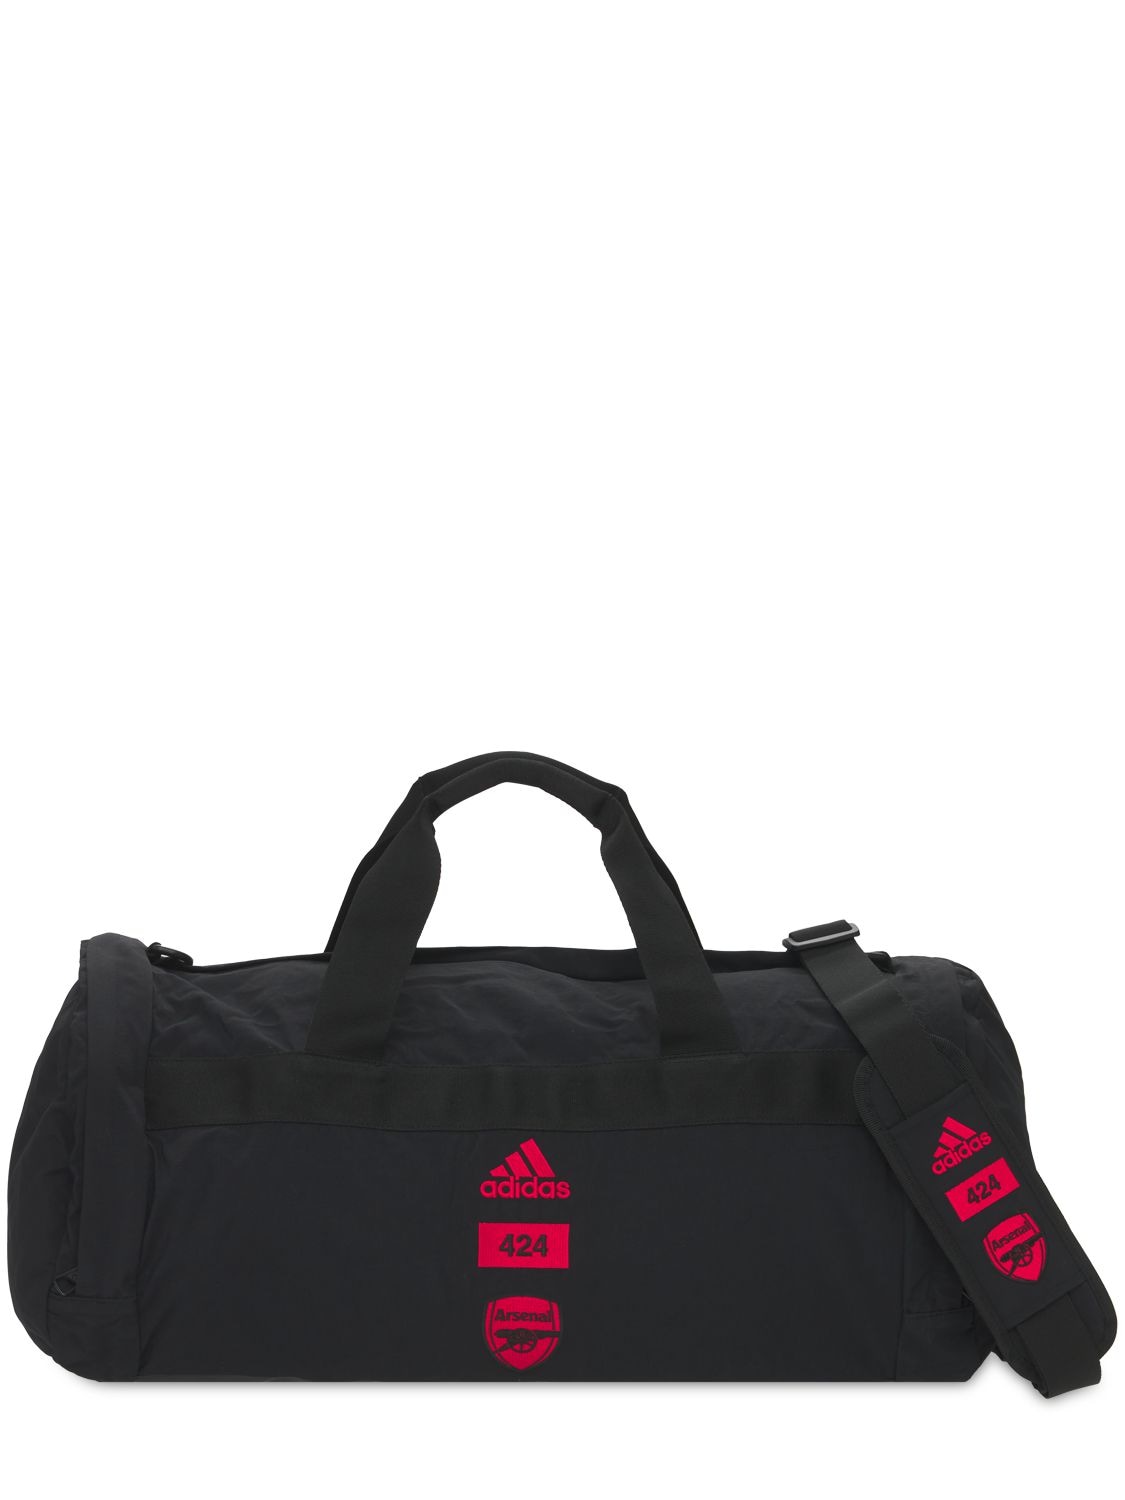 Adidas Originals Statement Afc X 424 Duffle Bag In Black